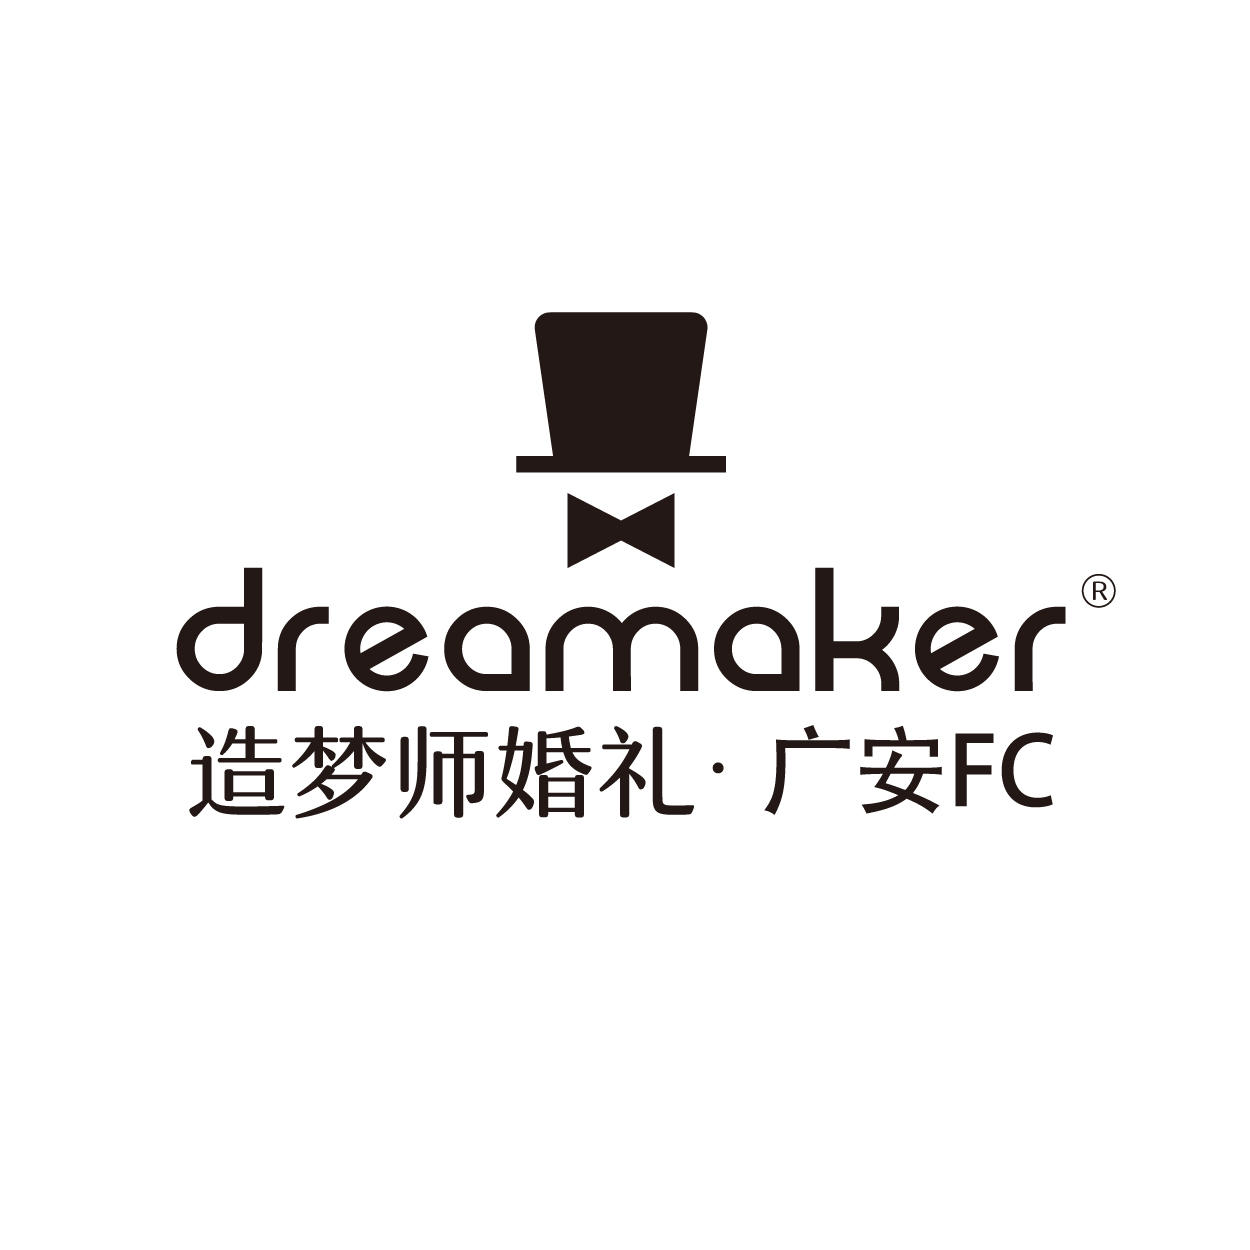 Dreamaker造梦师婚礼（广安FC）